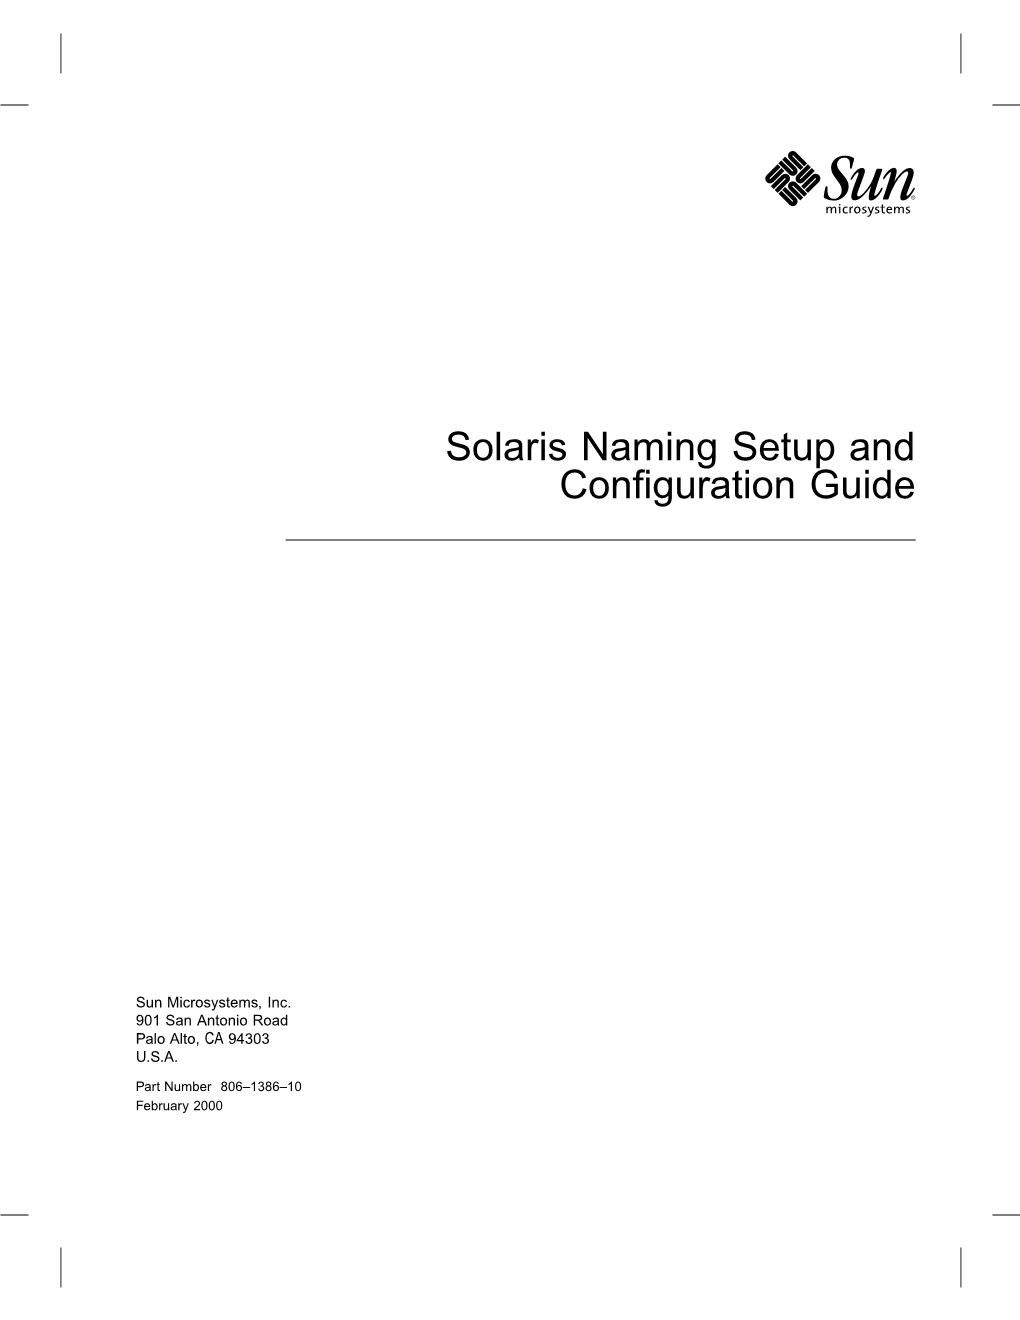 Solaris Naming Setup and Configuration